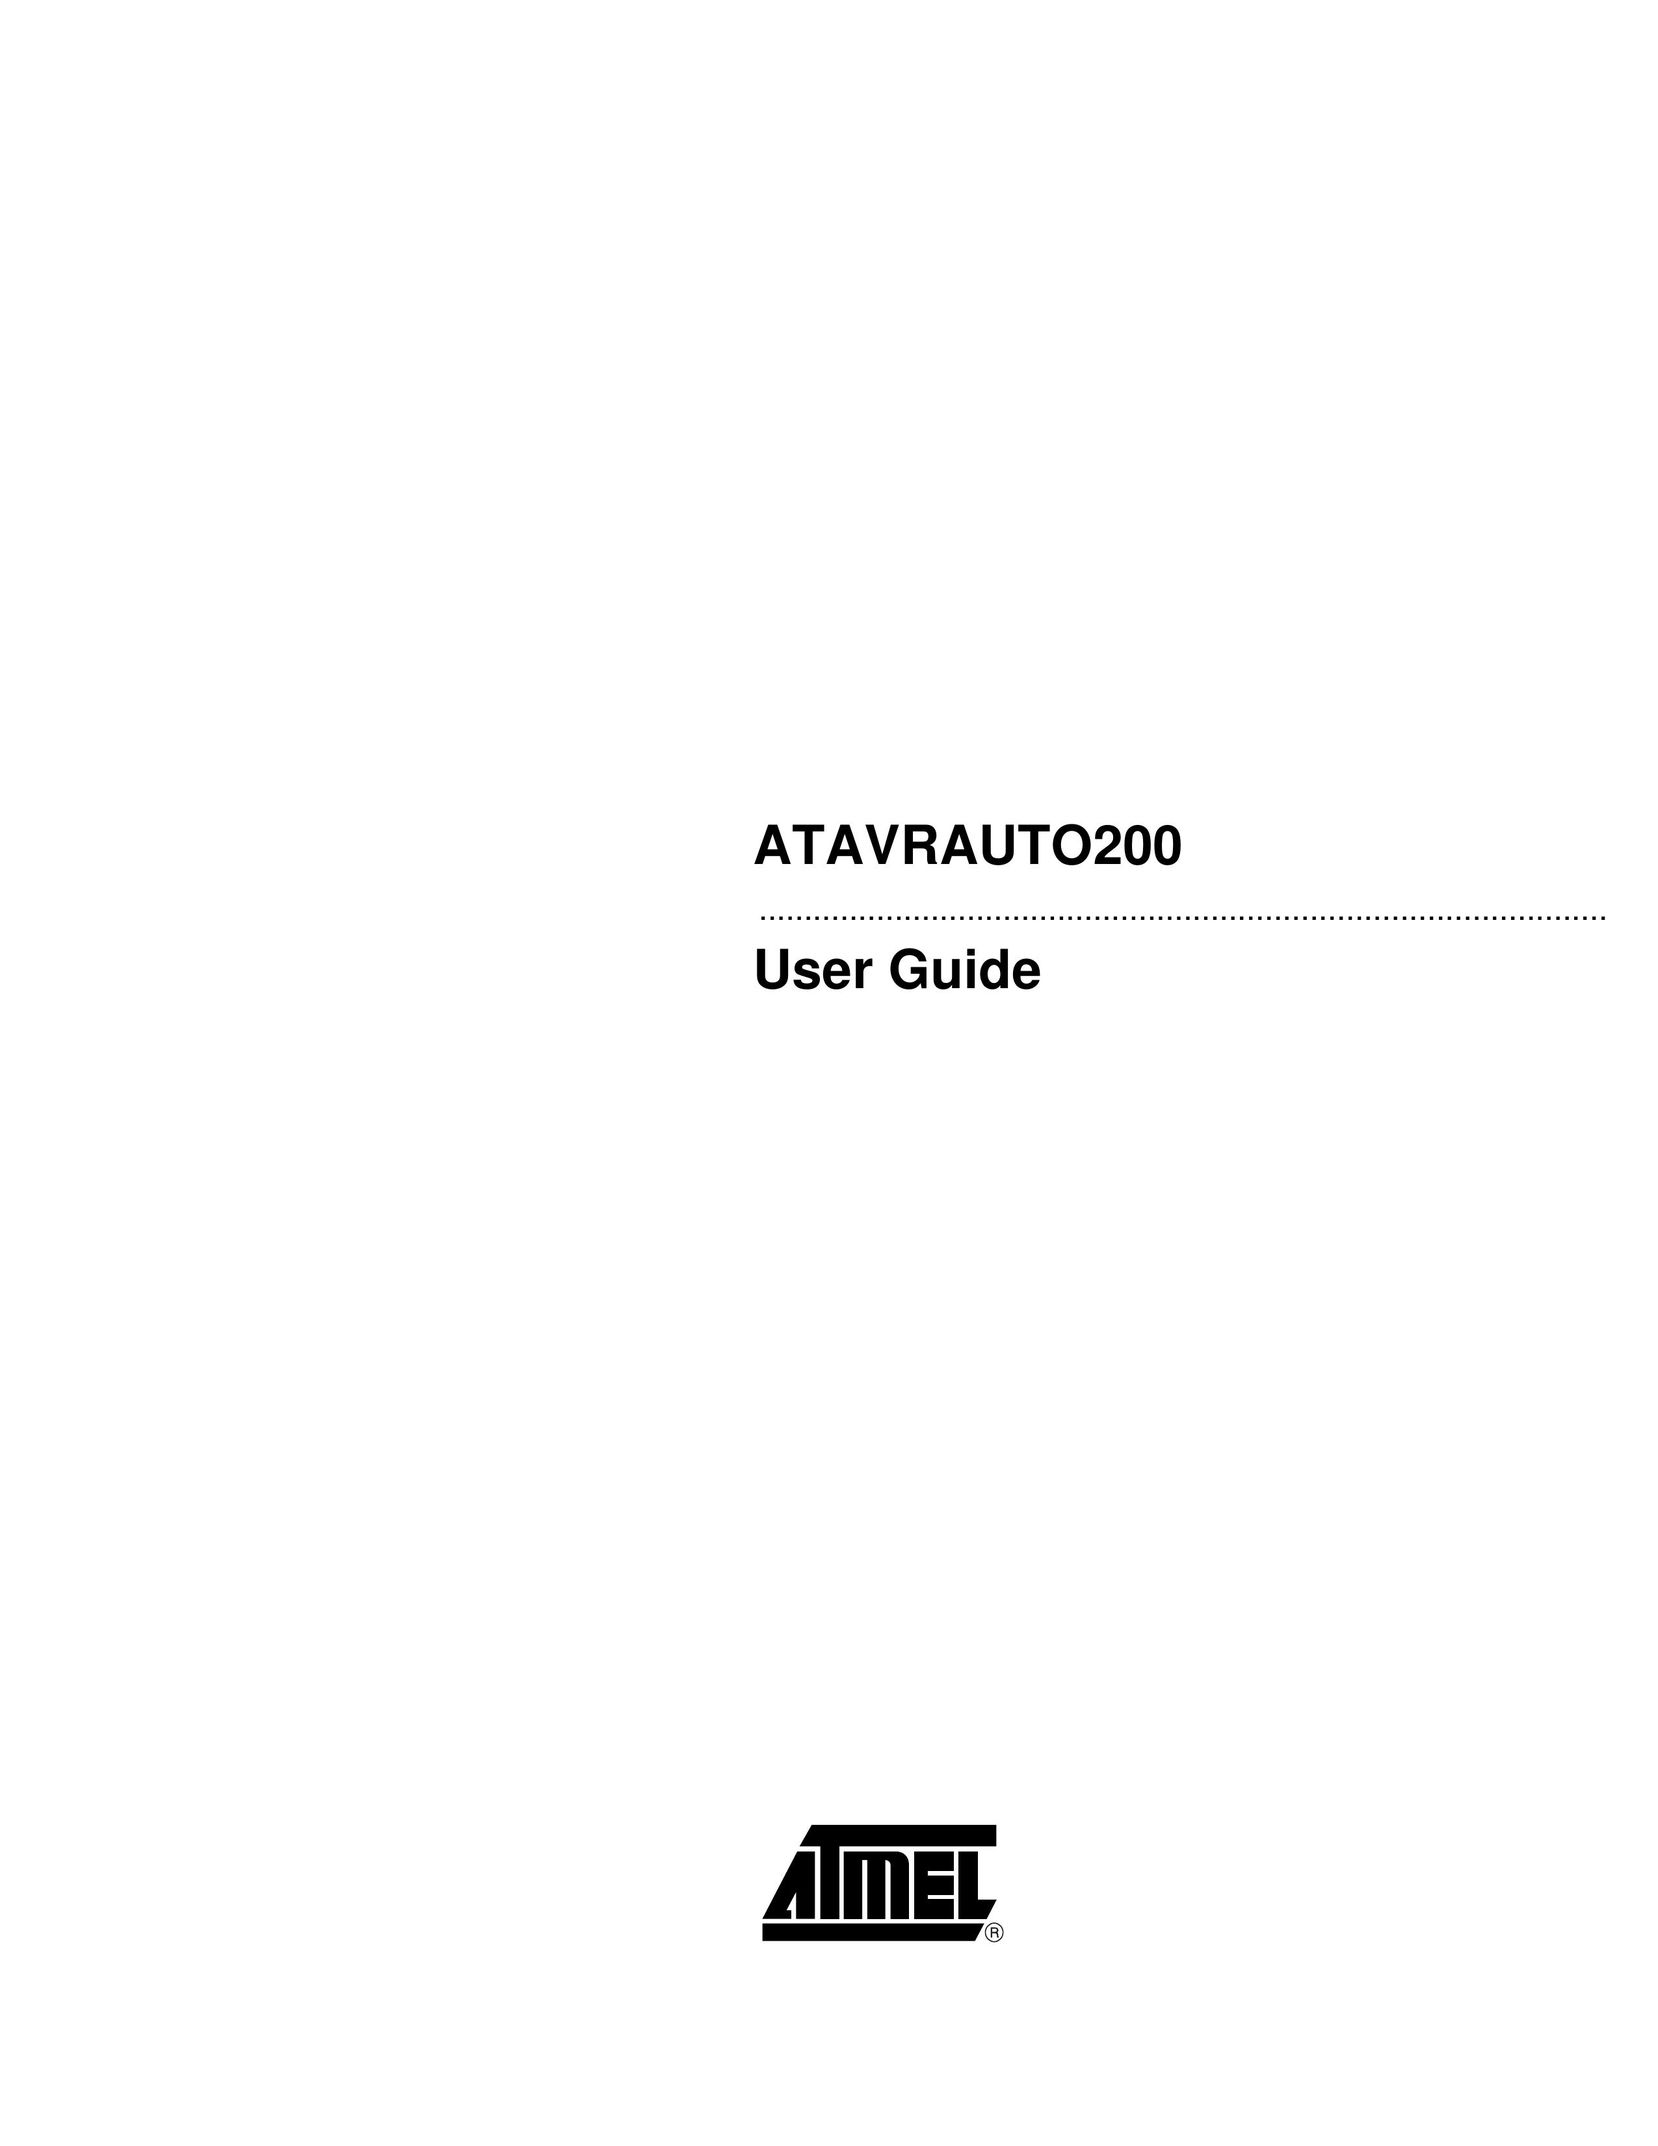 Atmel ATAVRAUTO200 Network Card User Manual